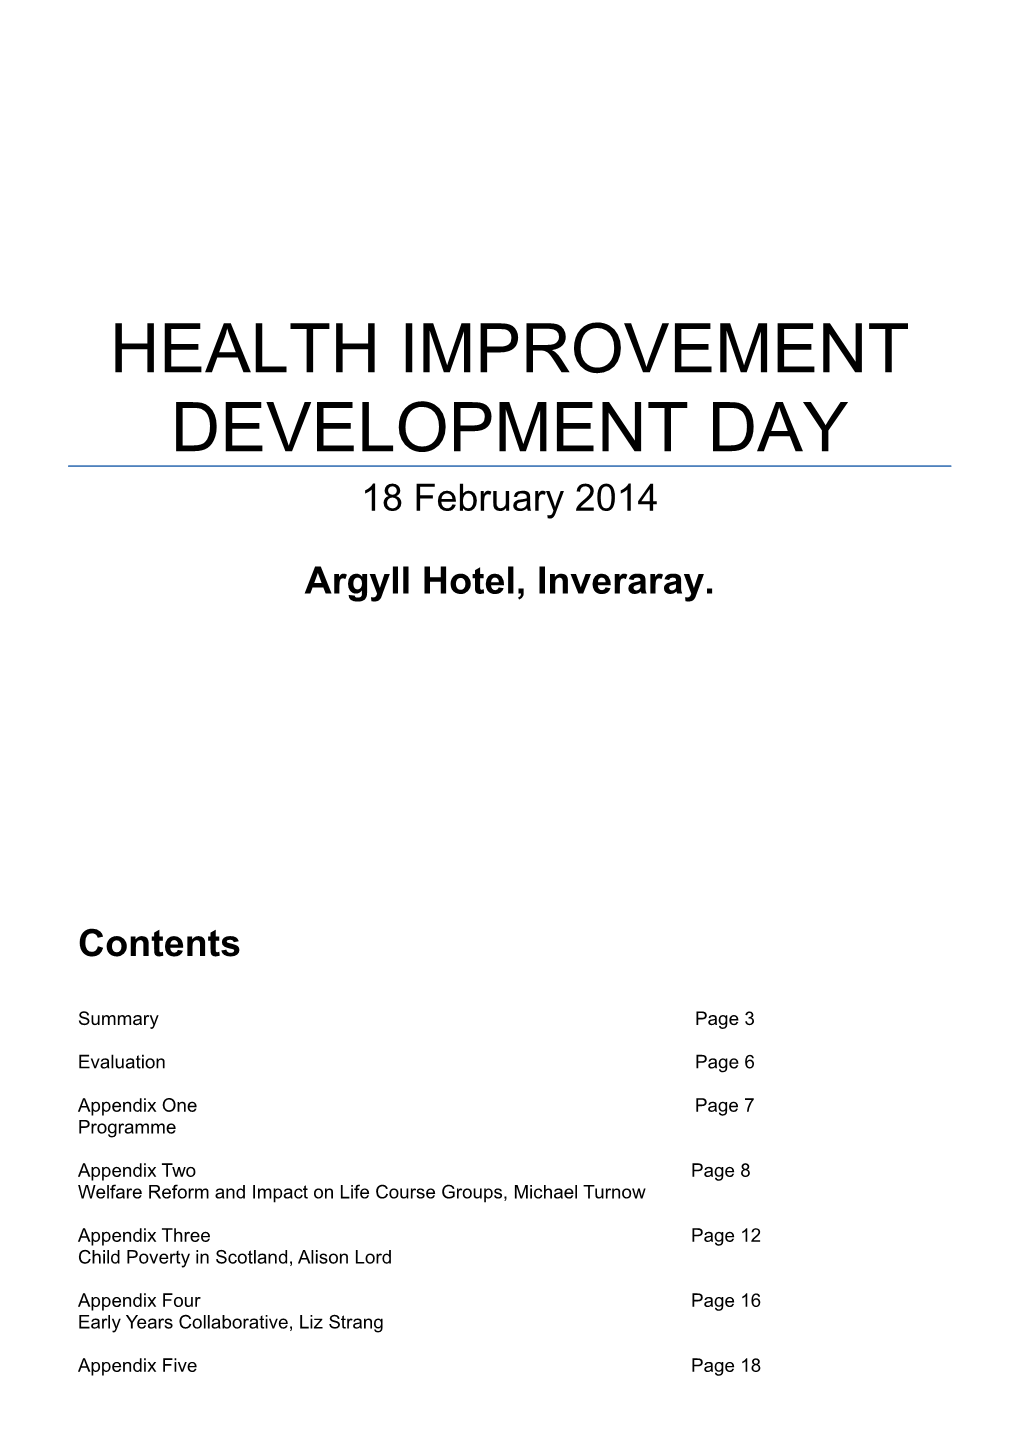 Health Improvement Development Day